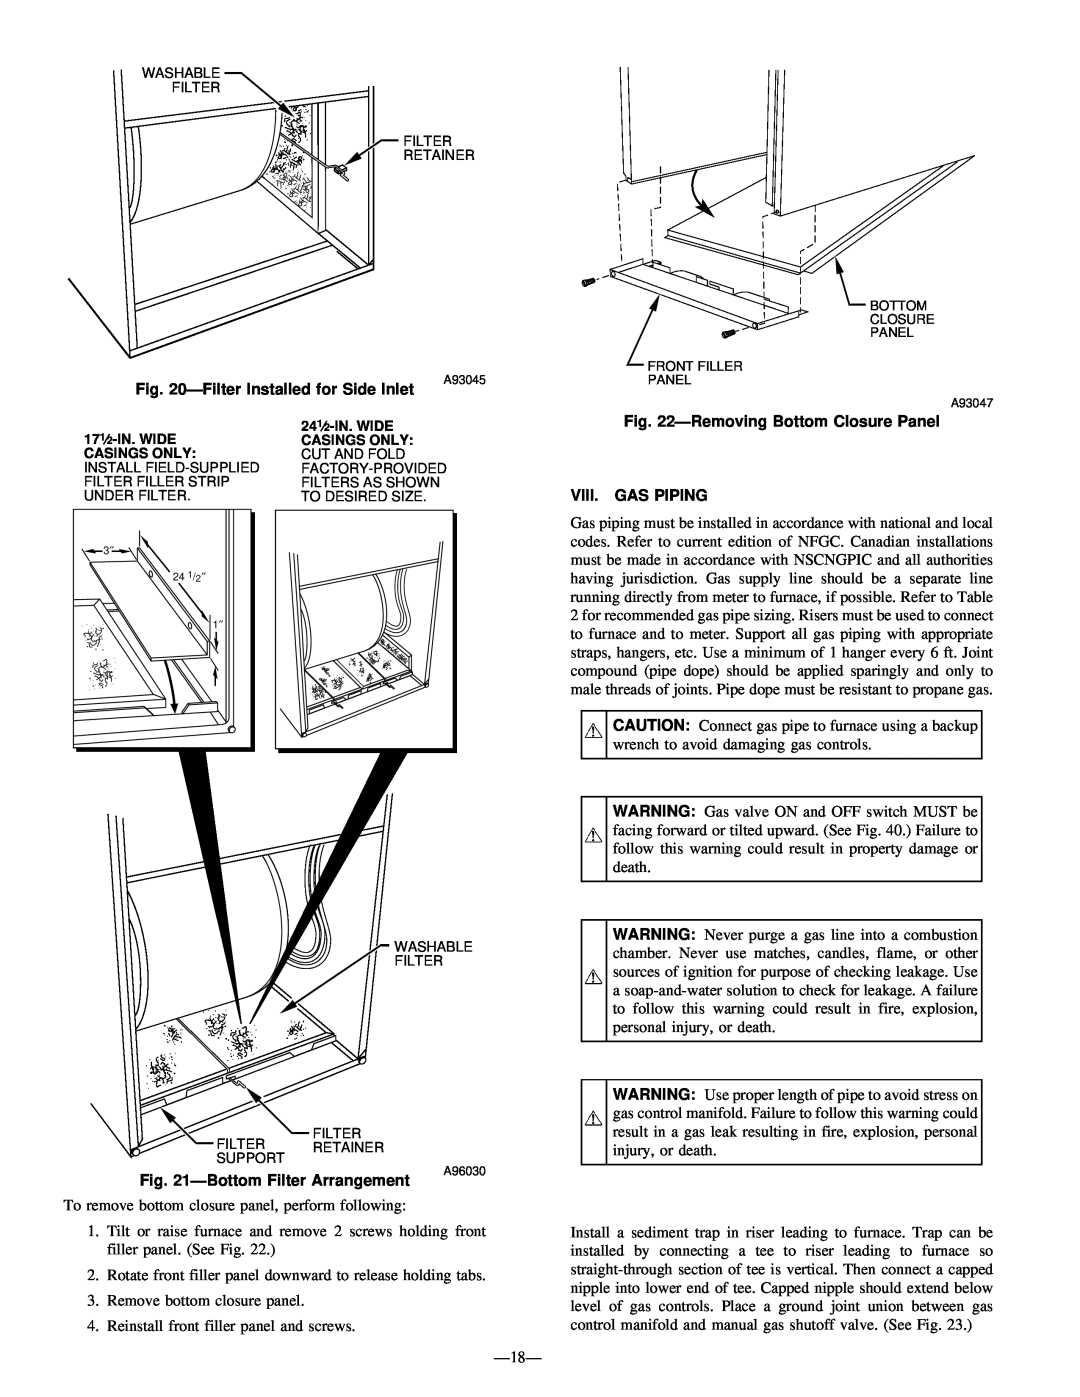 Bryant 345MAV instruction manual ÐFilter Installed for Side Inlet, ÐRemoving Bottom Closure Panel, Viii. Gas Piping 